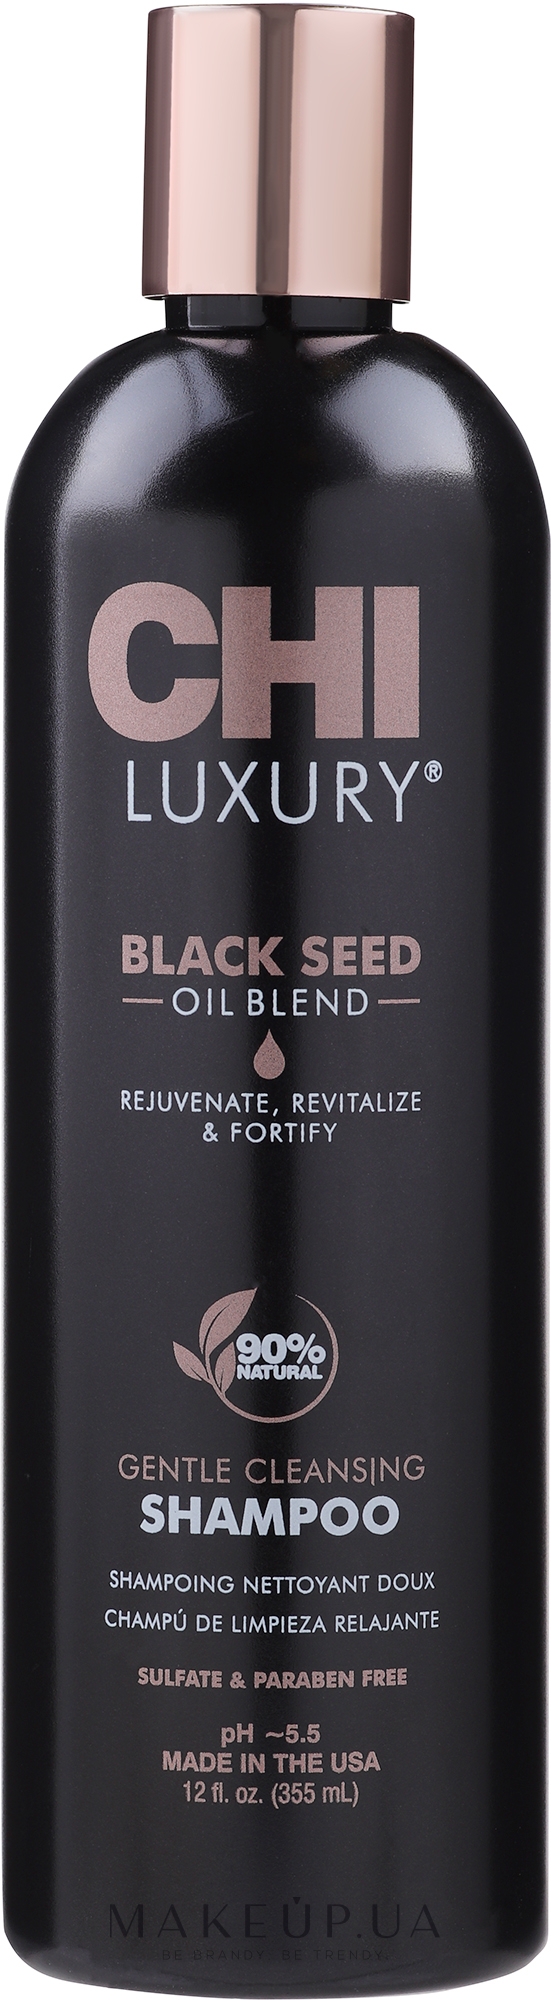 Нежный очищающий шампунь с маслом черного тмина - CHI Luxury Black Seed Oil Gentle Cleansing Shampoo — фото 355ml